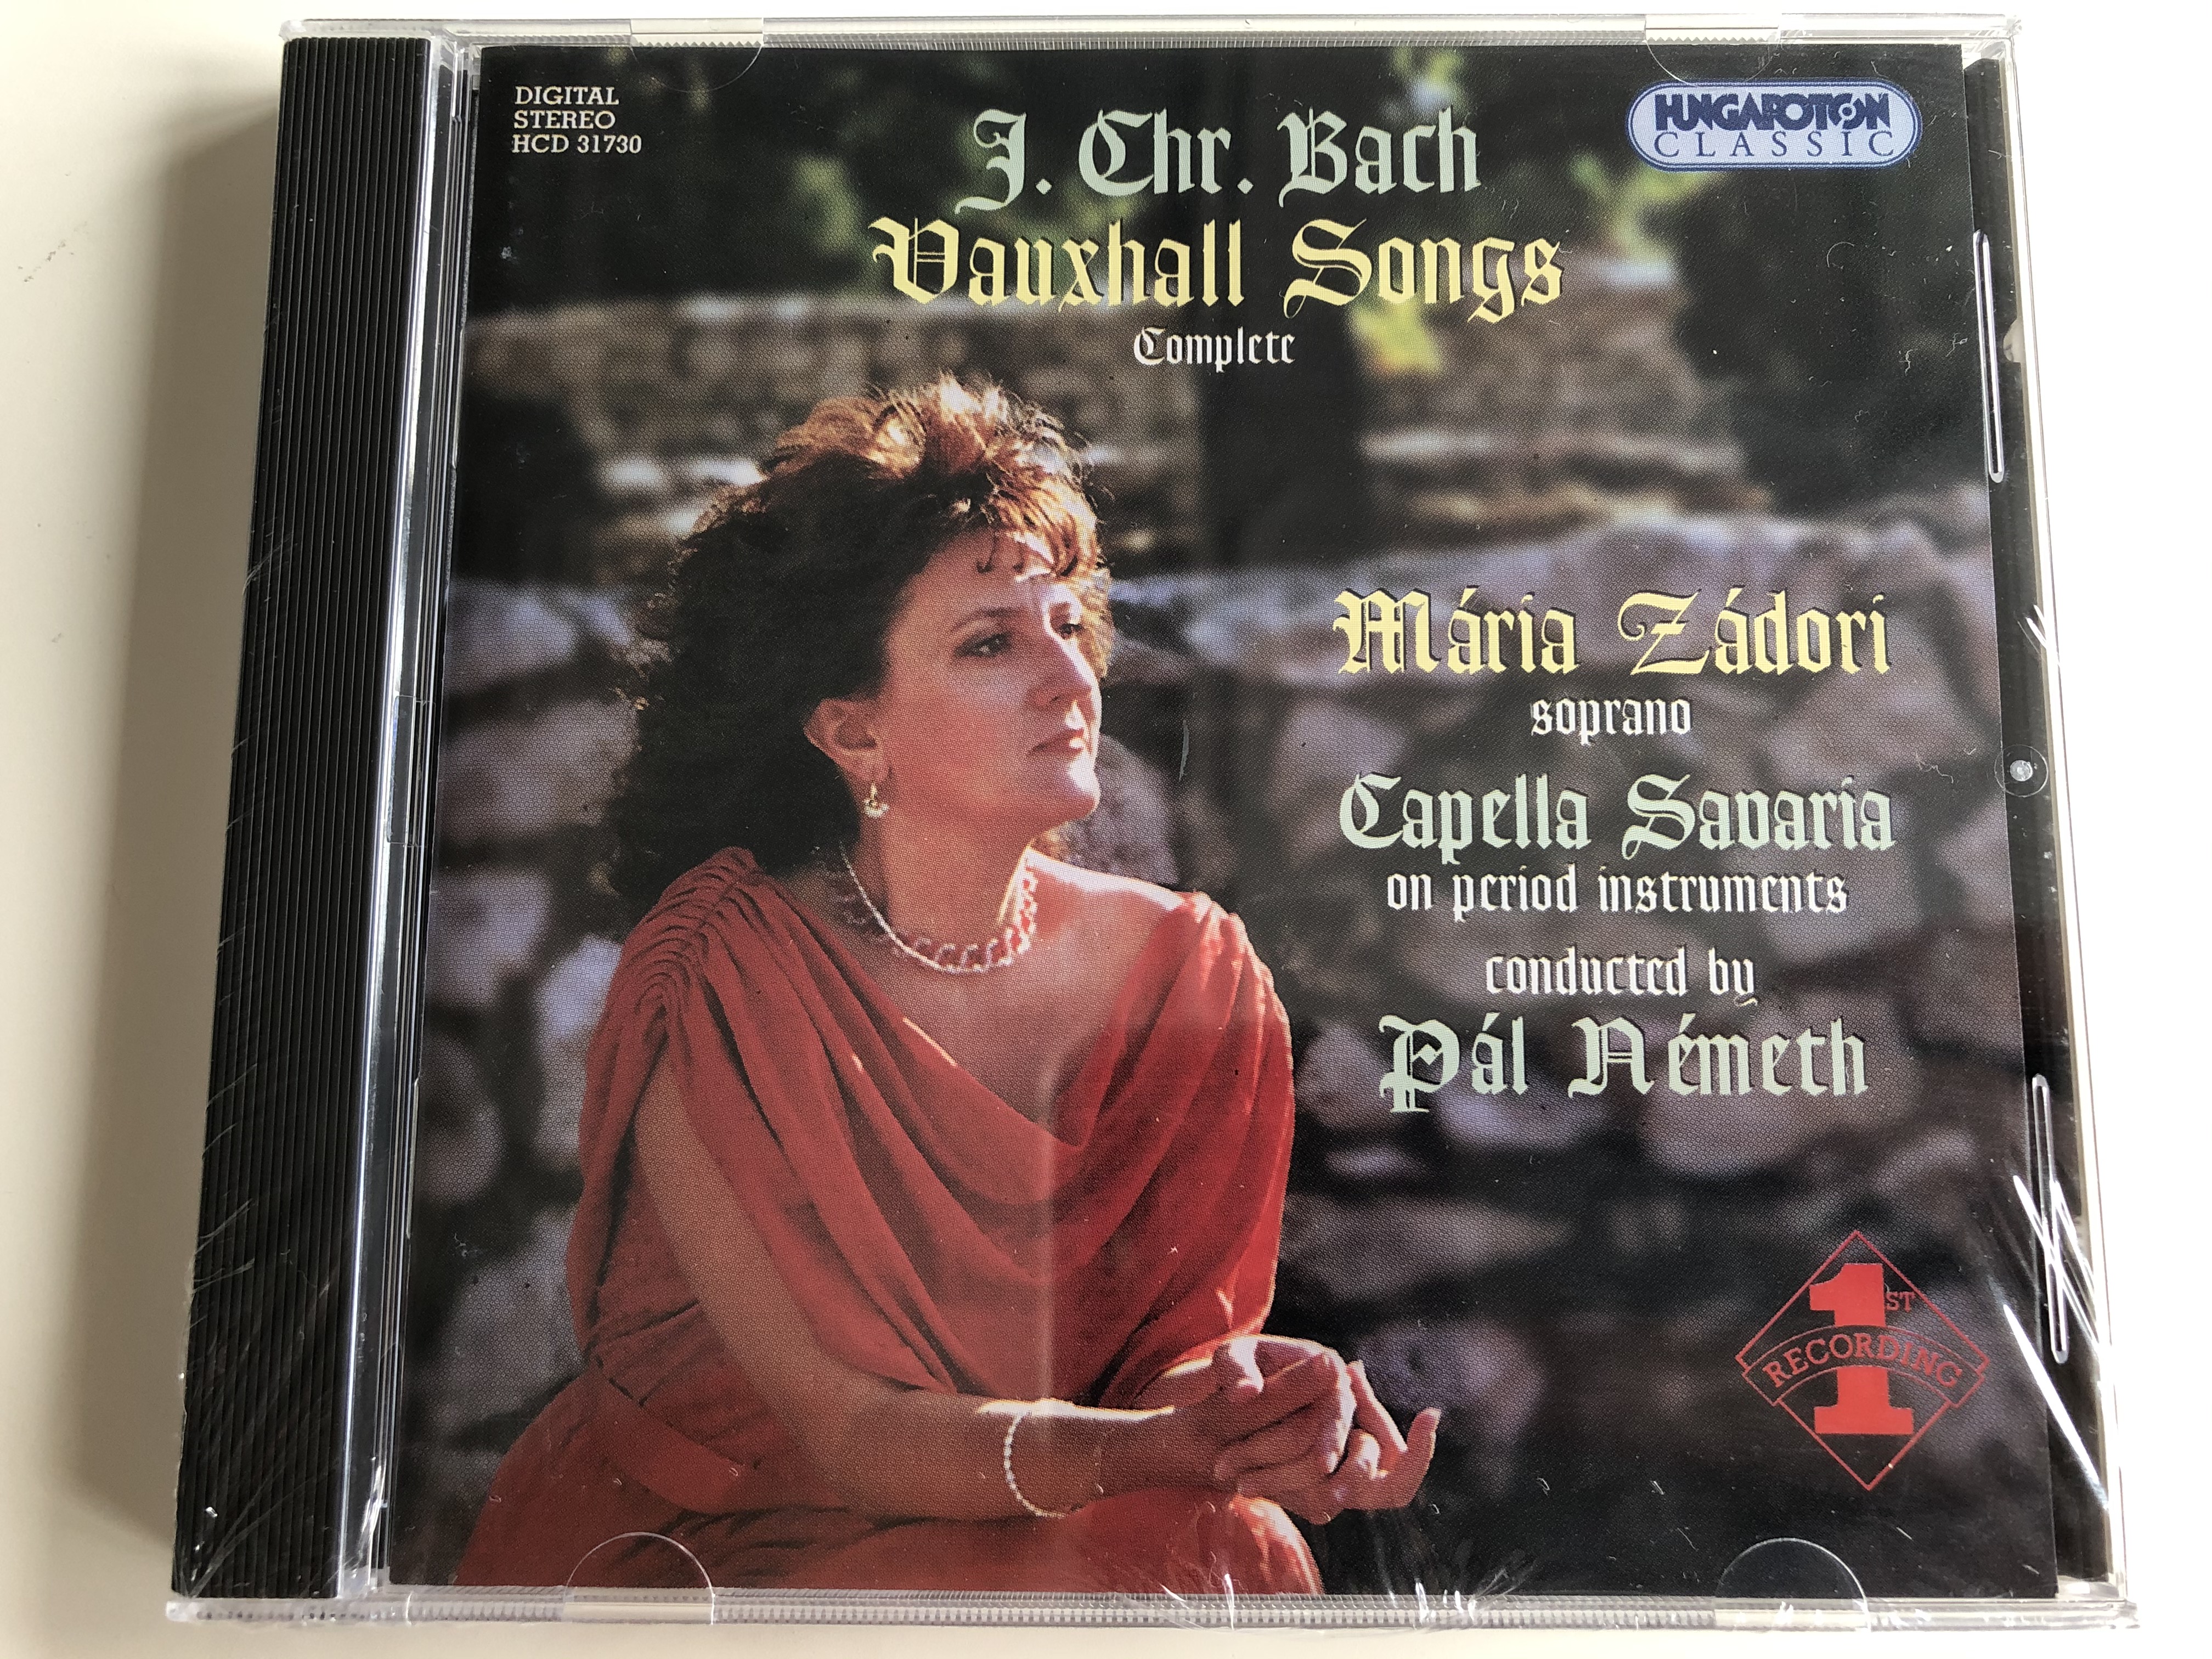 j.-chr.-bach-vauxhall-songs-complete-maria-zadori-soprano-capella-savaria-on-period-instruments-conducted-pal-nemeth-hungaroton-classic-audio-cd-1998-stereo-hcd-31730-1-.jpg